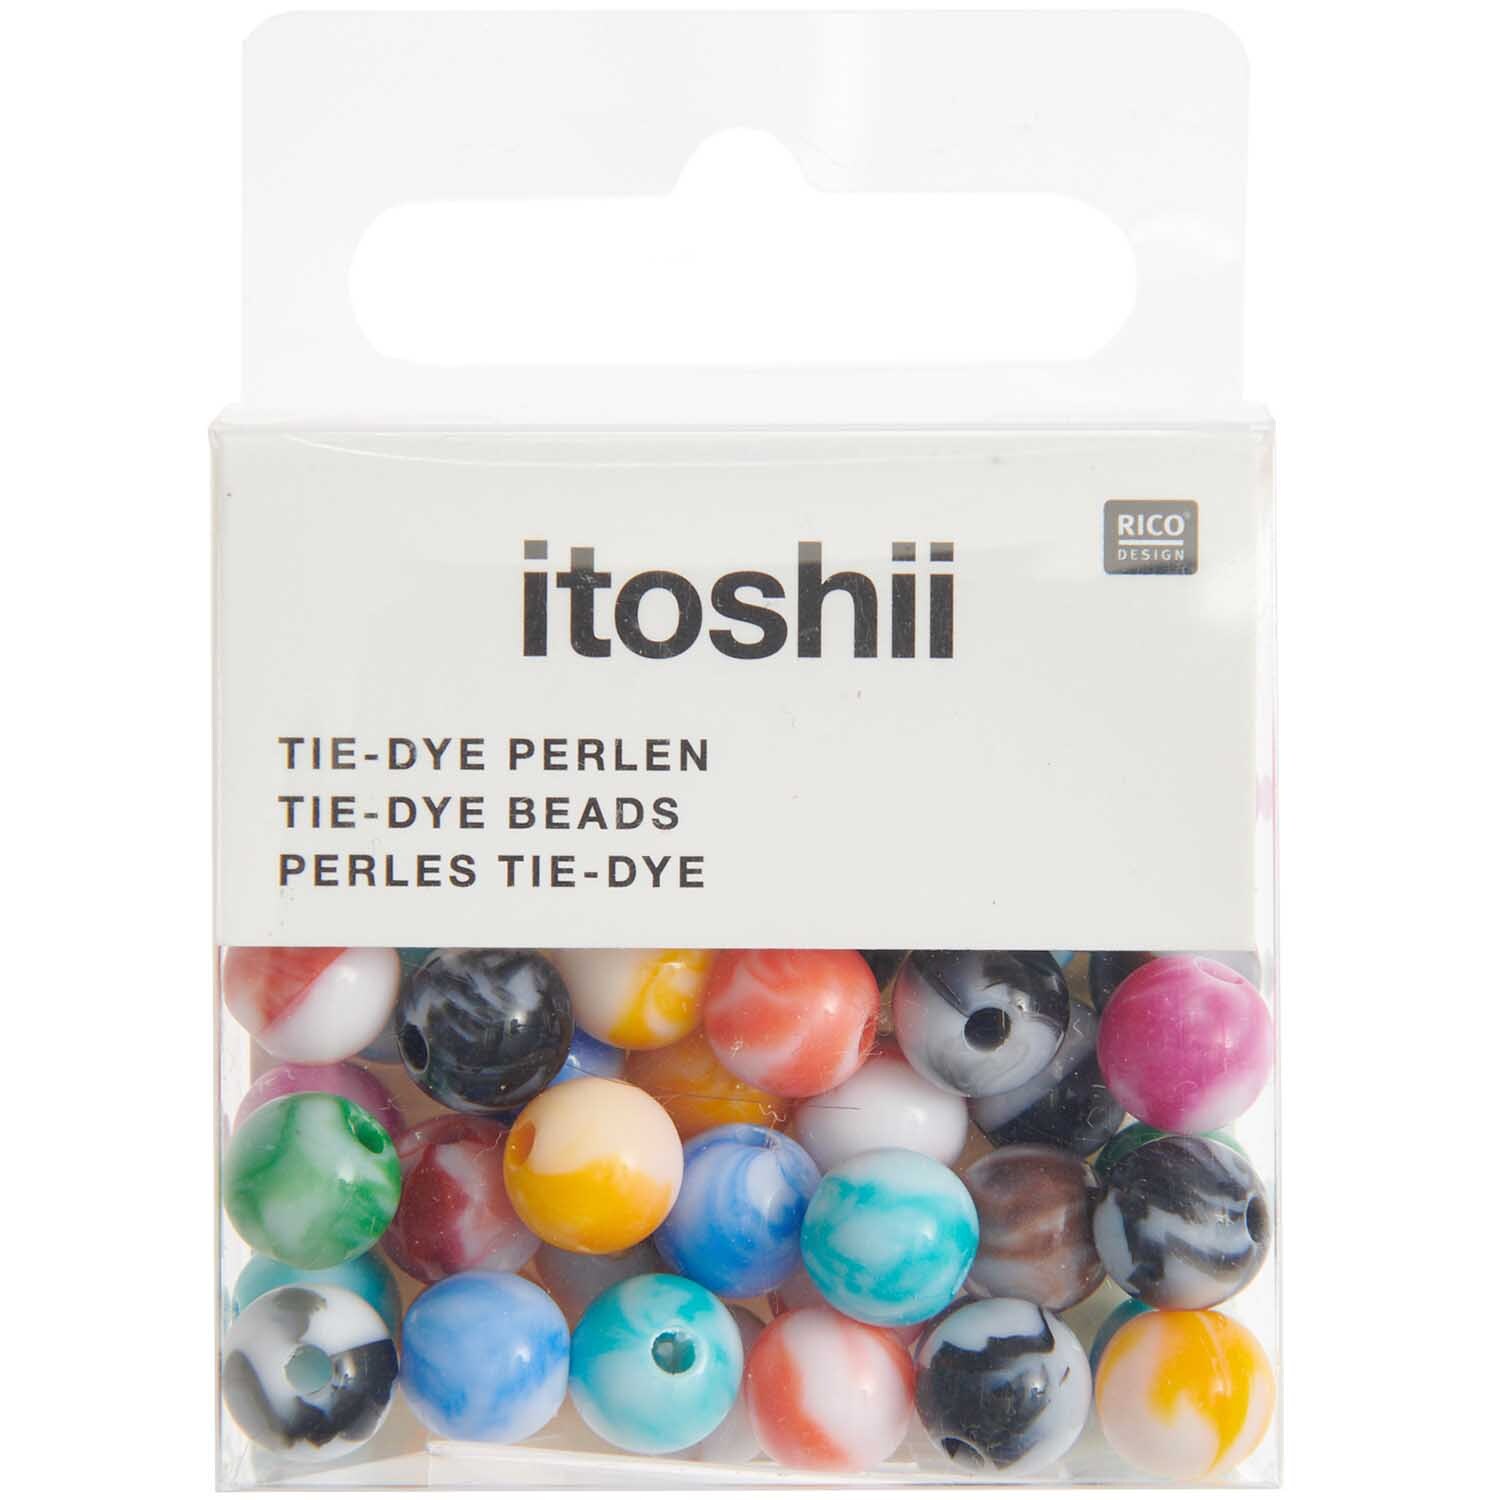 itoshii Tie-dye Perlen multicolor 8mm 48 Stück